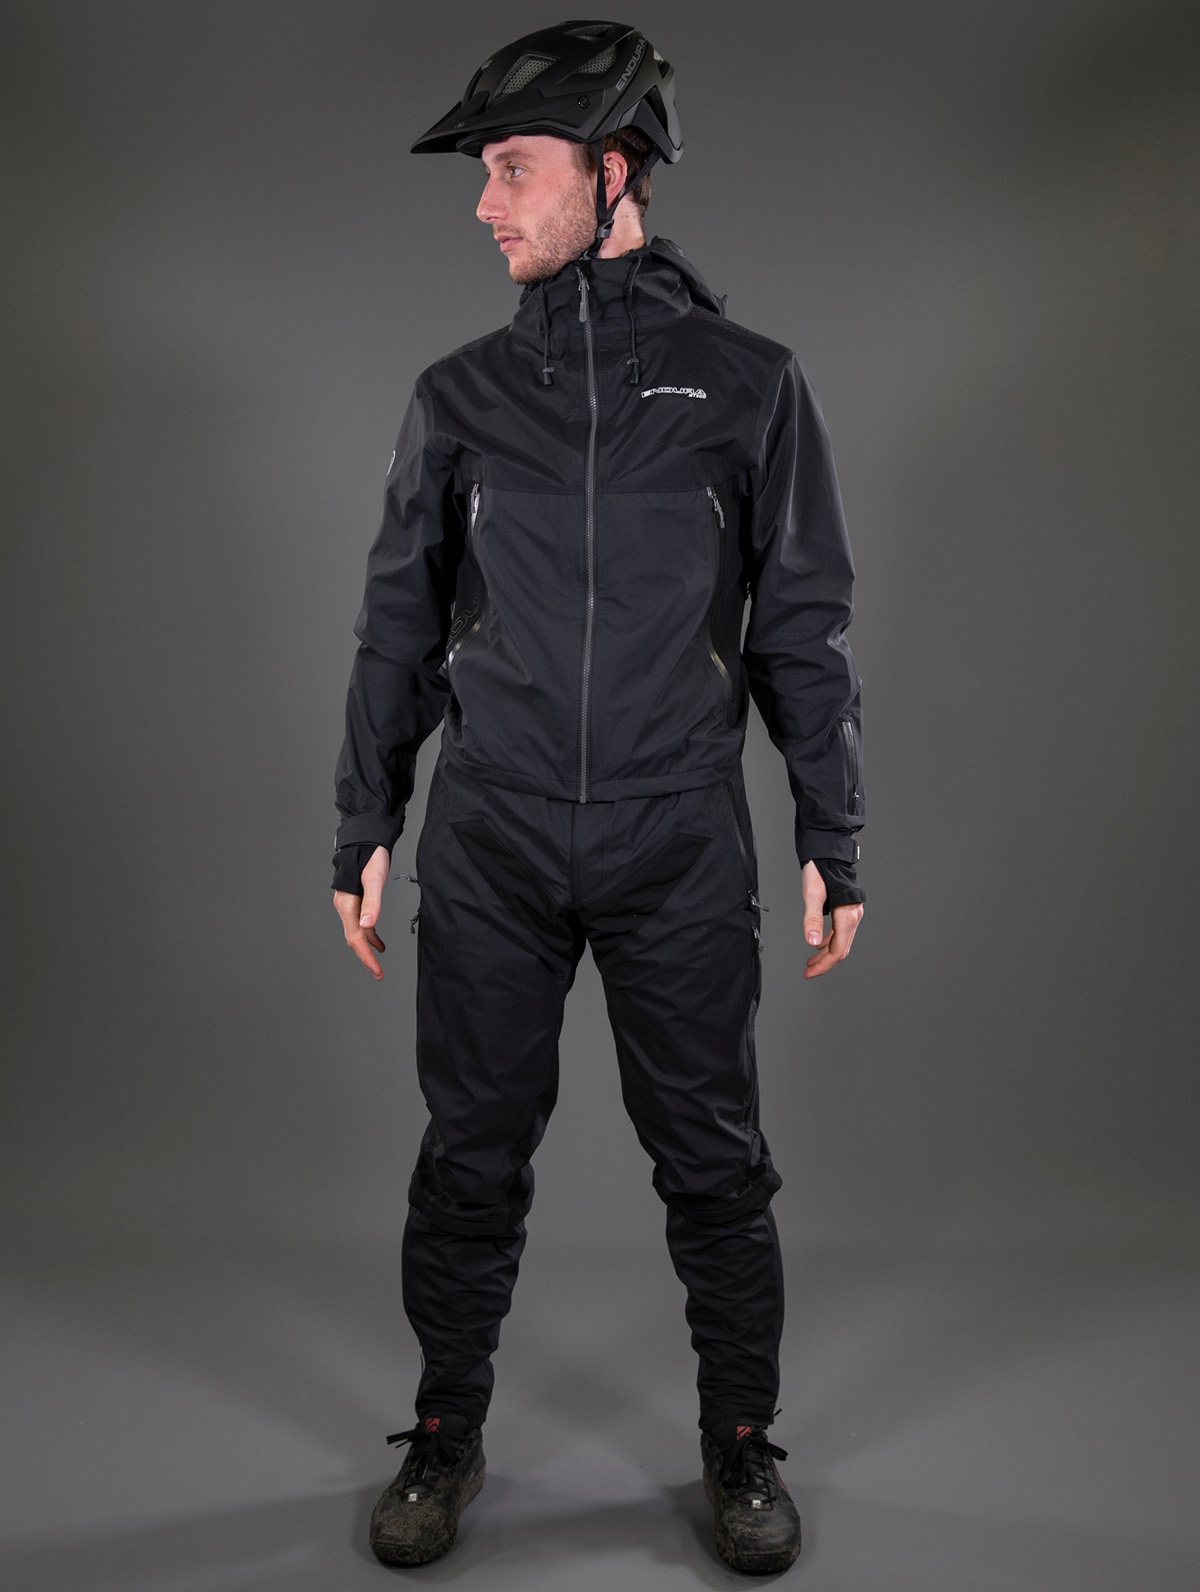 Danny MacAskill gets #DownrightDirty in the new Endura MT500 rain suit